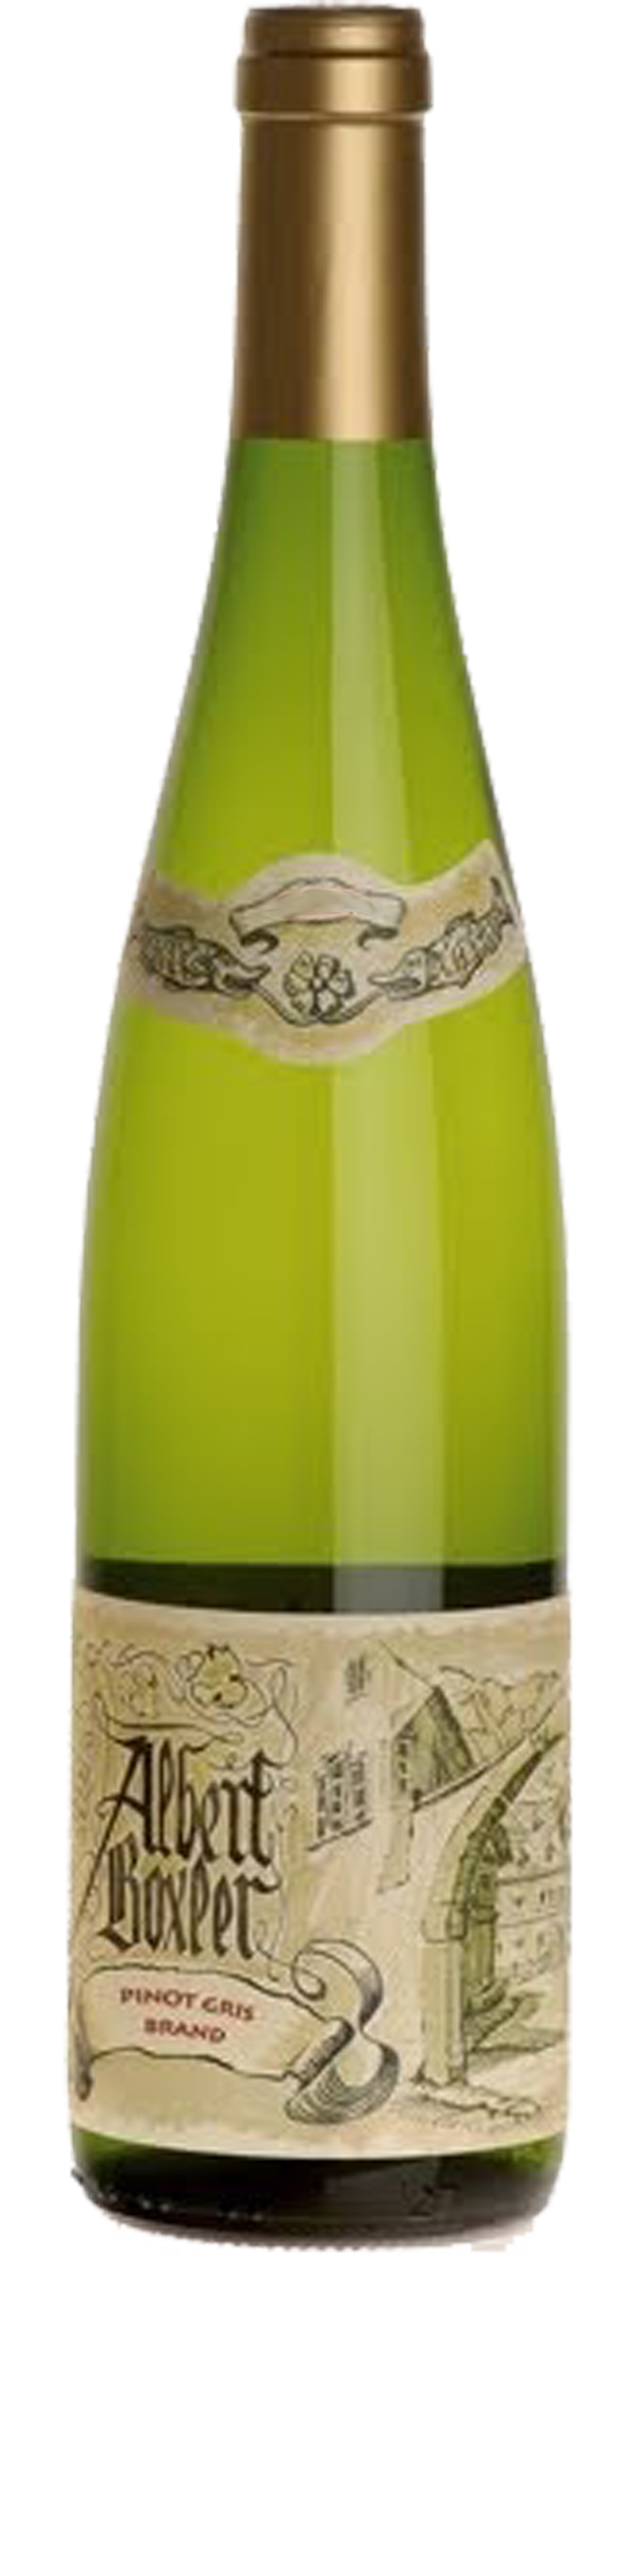 Bottle shot of 2012 Pinot Gris Grand Cru Brand